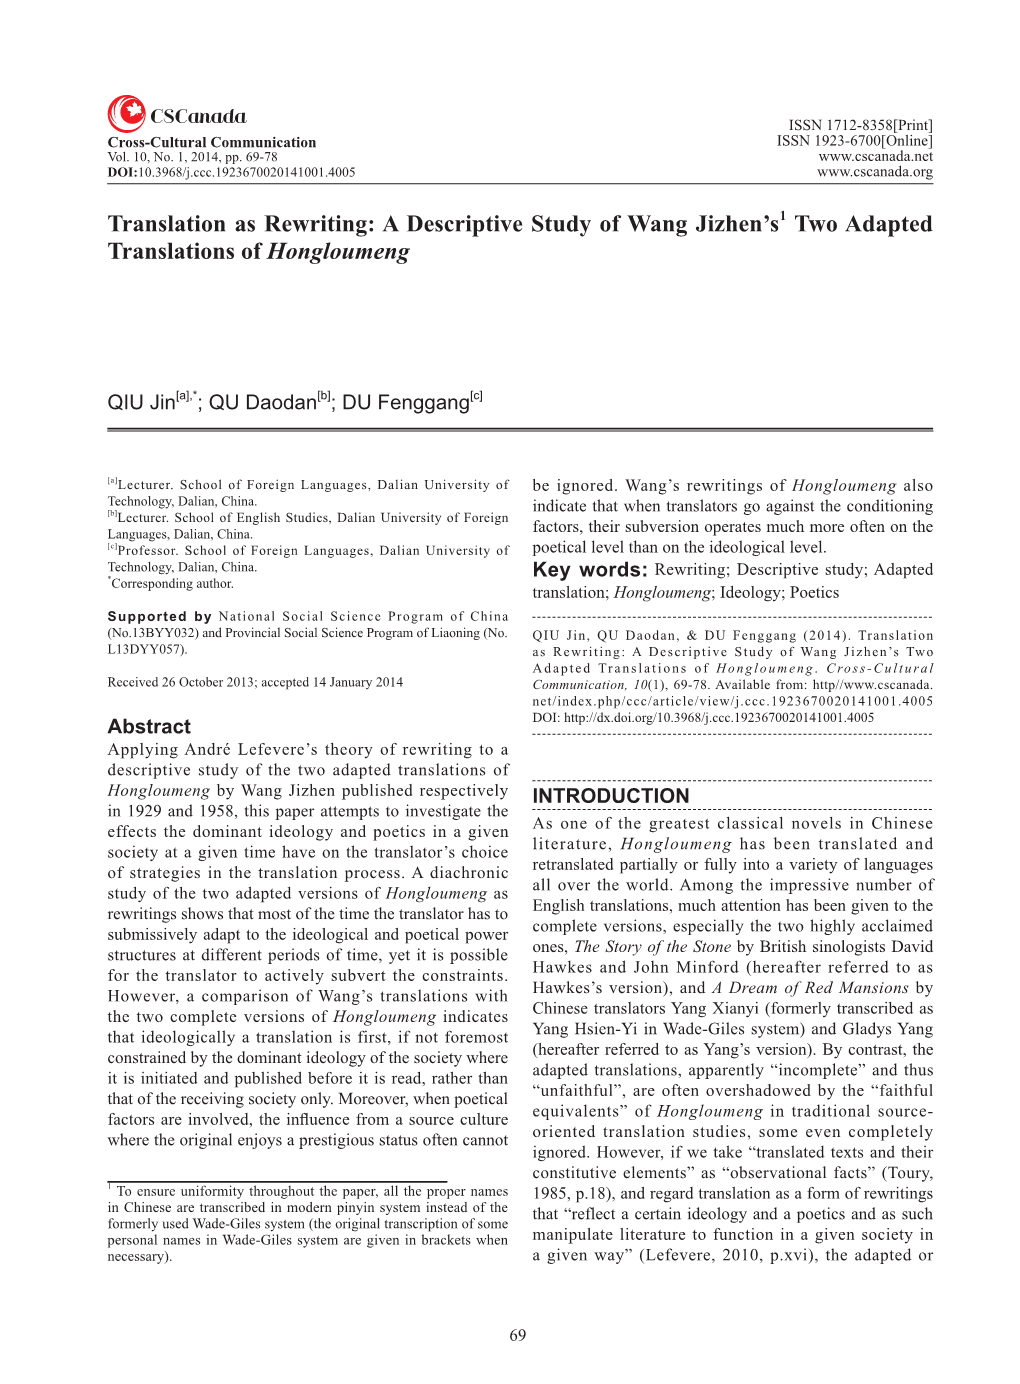 Translation As Rewriting: a Descriptive Study of Wang Jizhen’S1 Two Adapted Translations of Hongloumeng